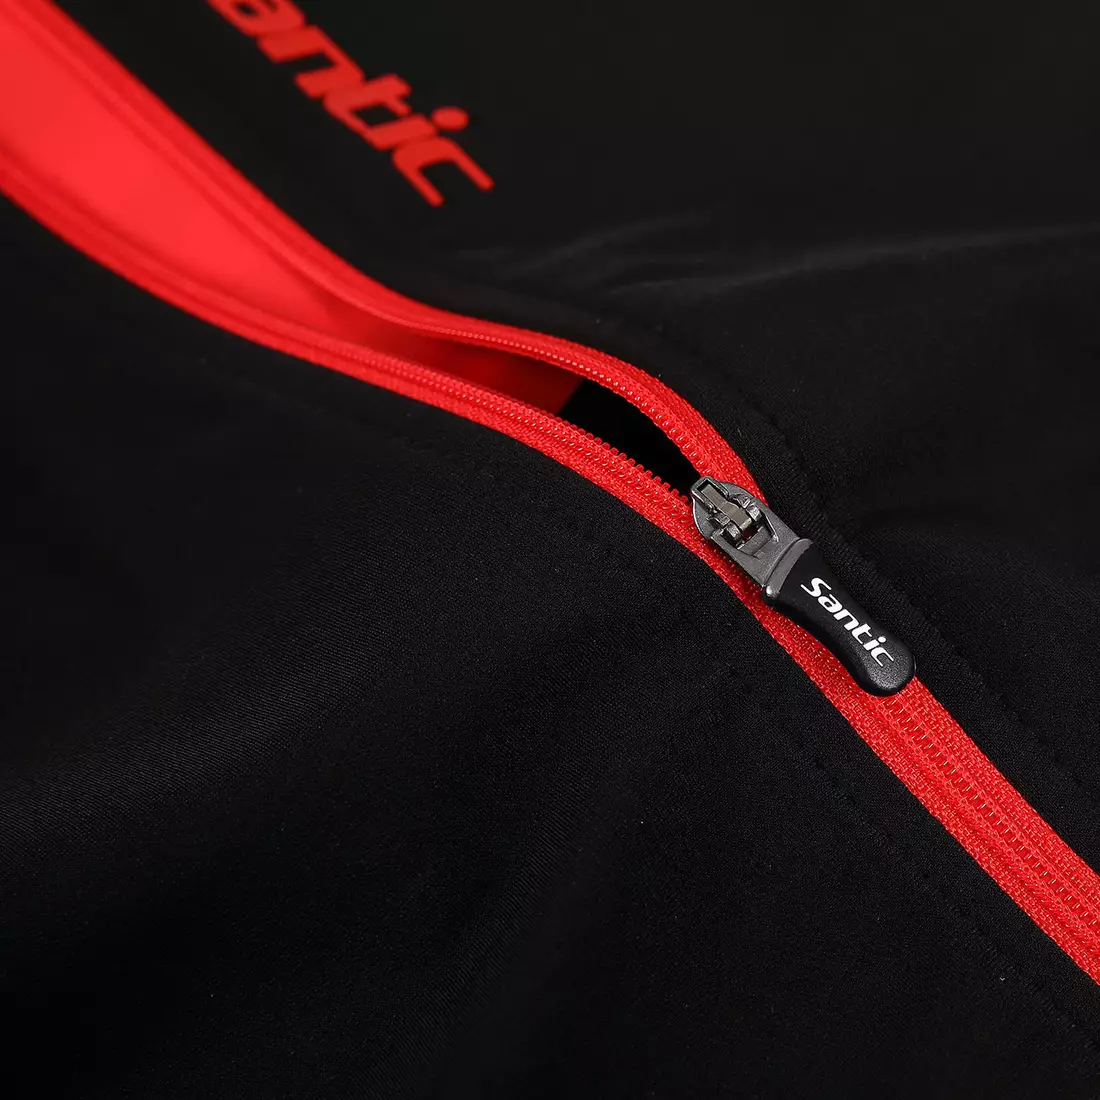 SANTIC schwarz-rotes Radsport-Sweatshirt